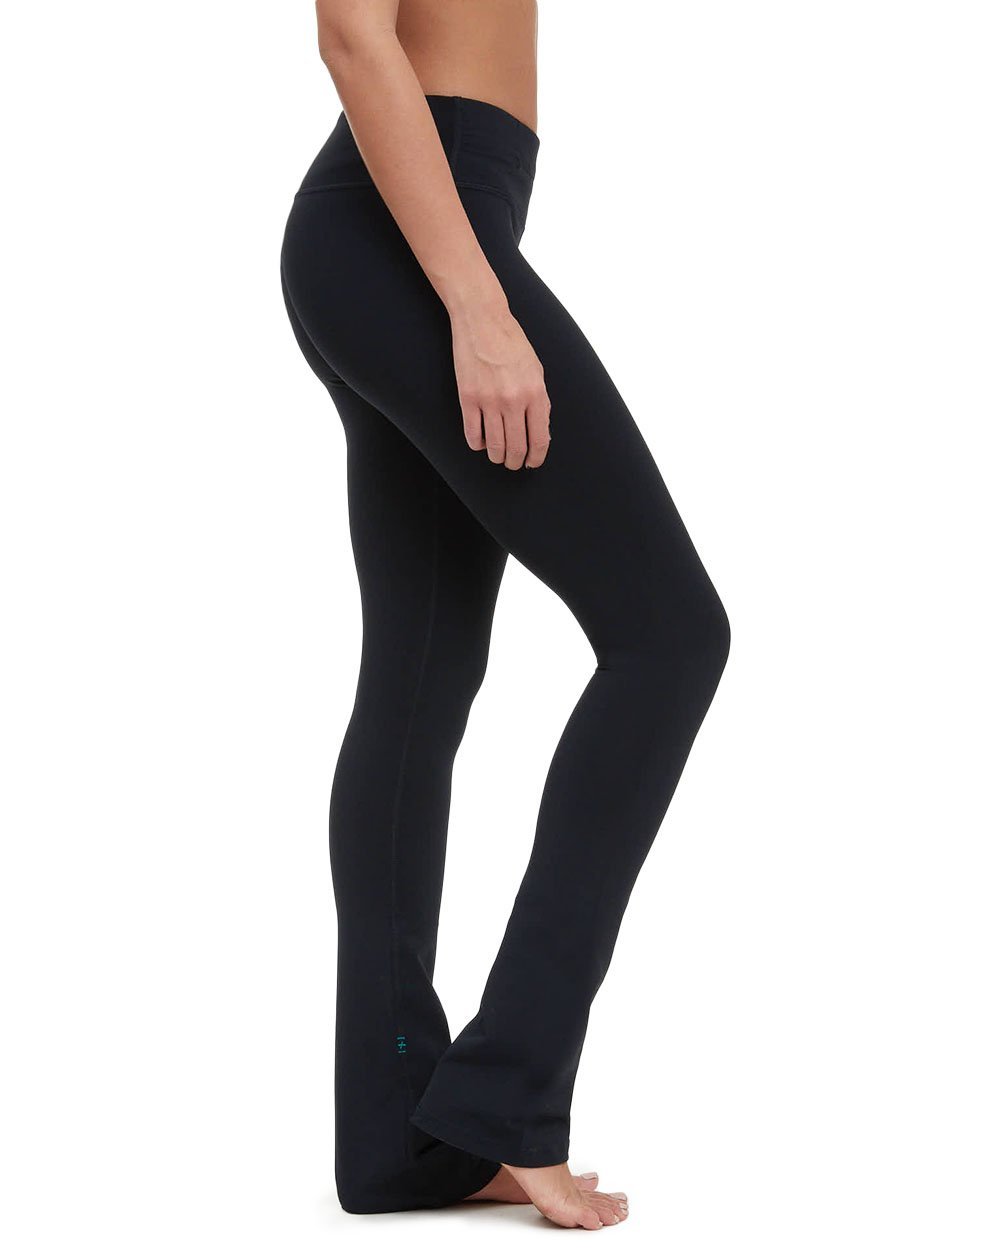 Fitness Pants, Yoga Pants For Women, Workout Apparel – Nancy Rose